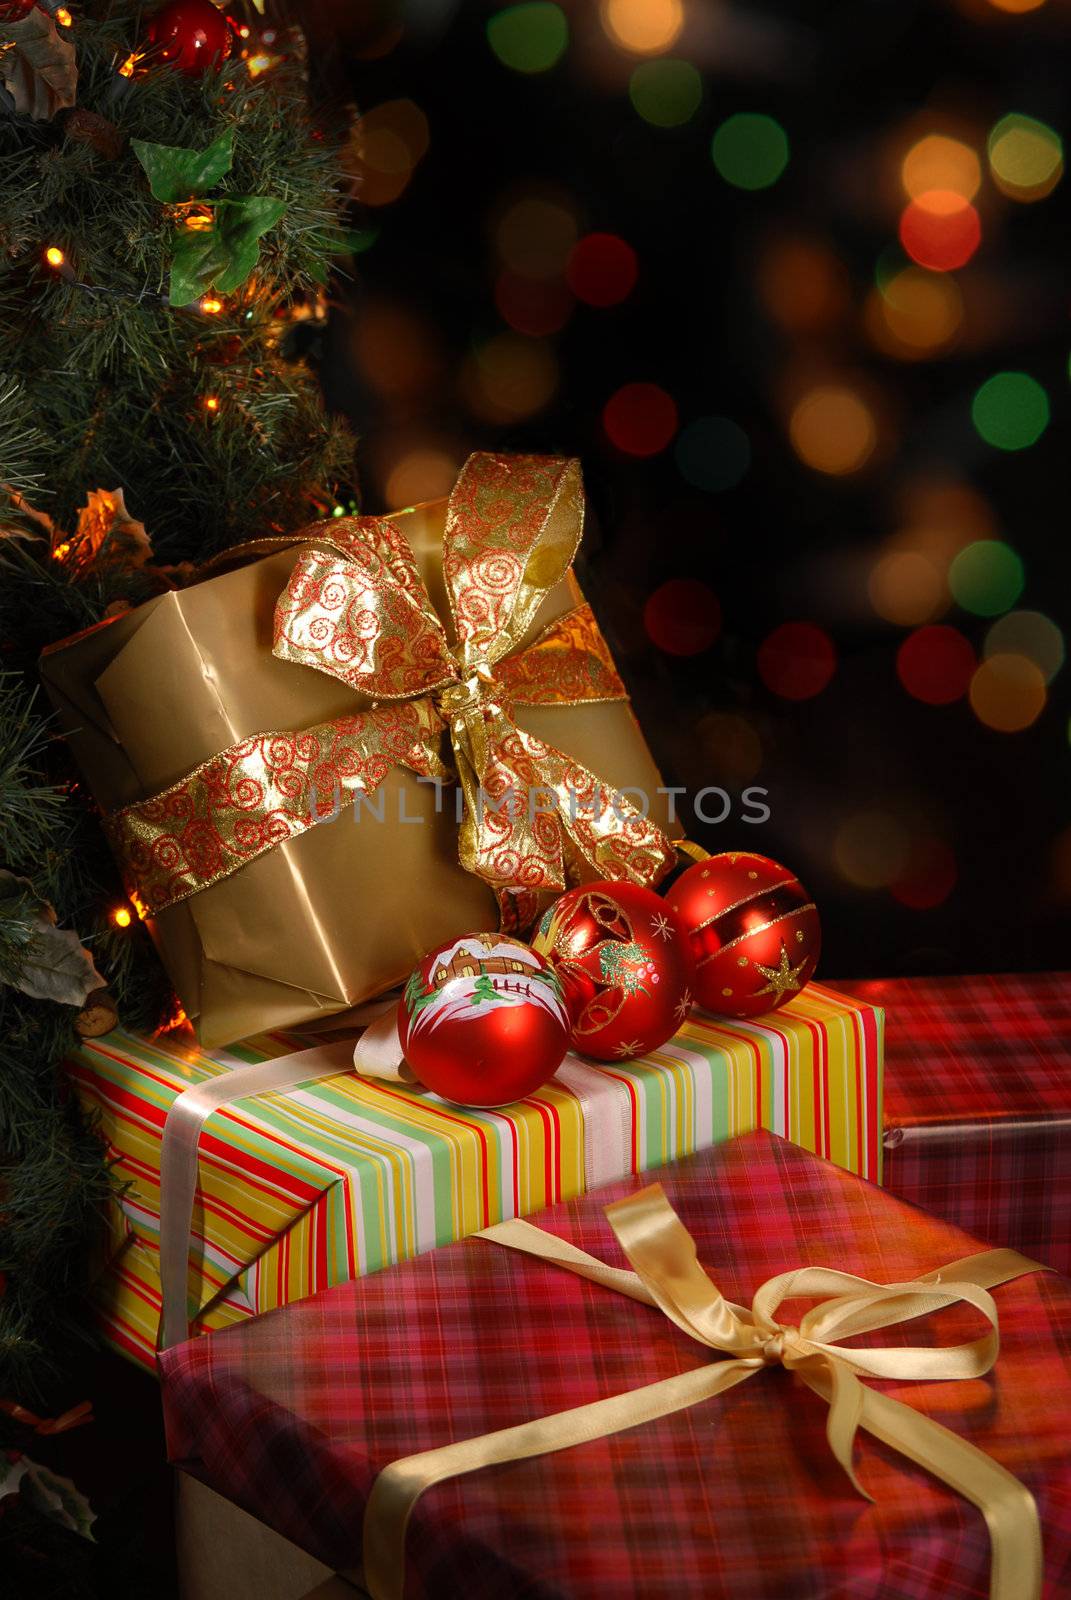 Gifts under the Christmas tree by fotorutkowscy